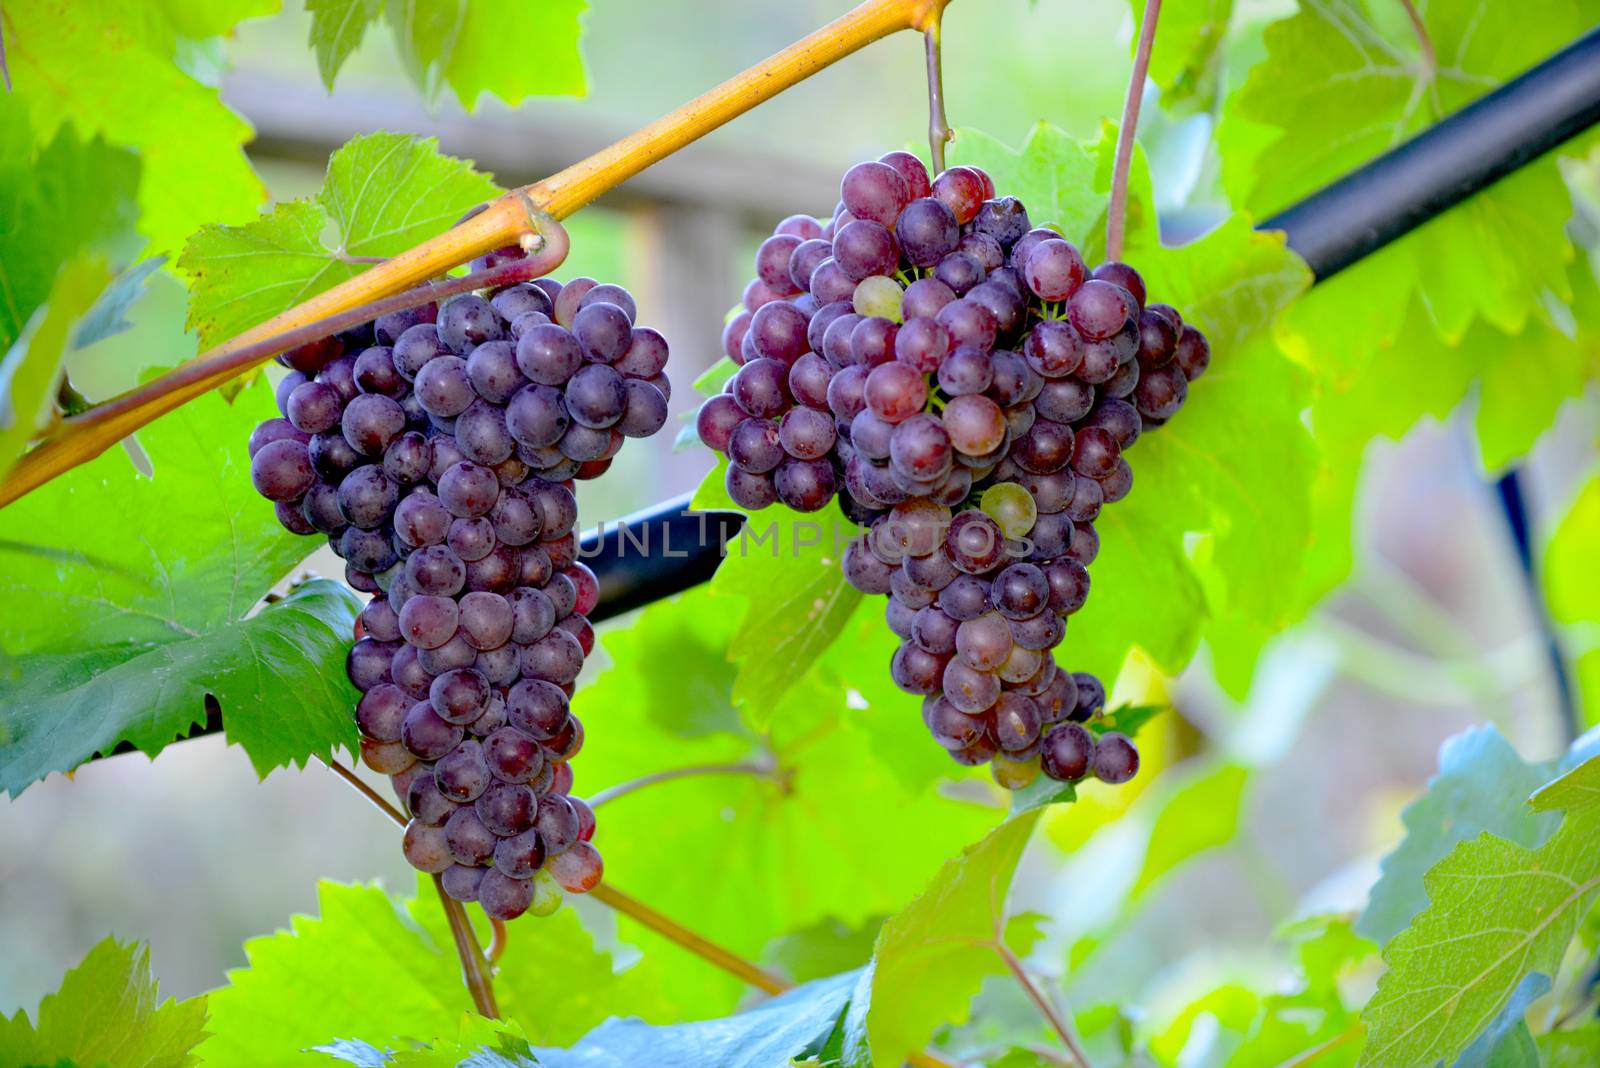 october morning shot of a ripe grapes in wineyard,image